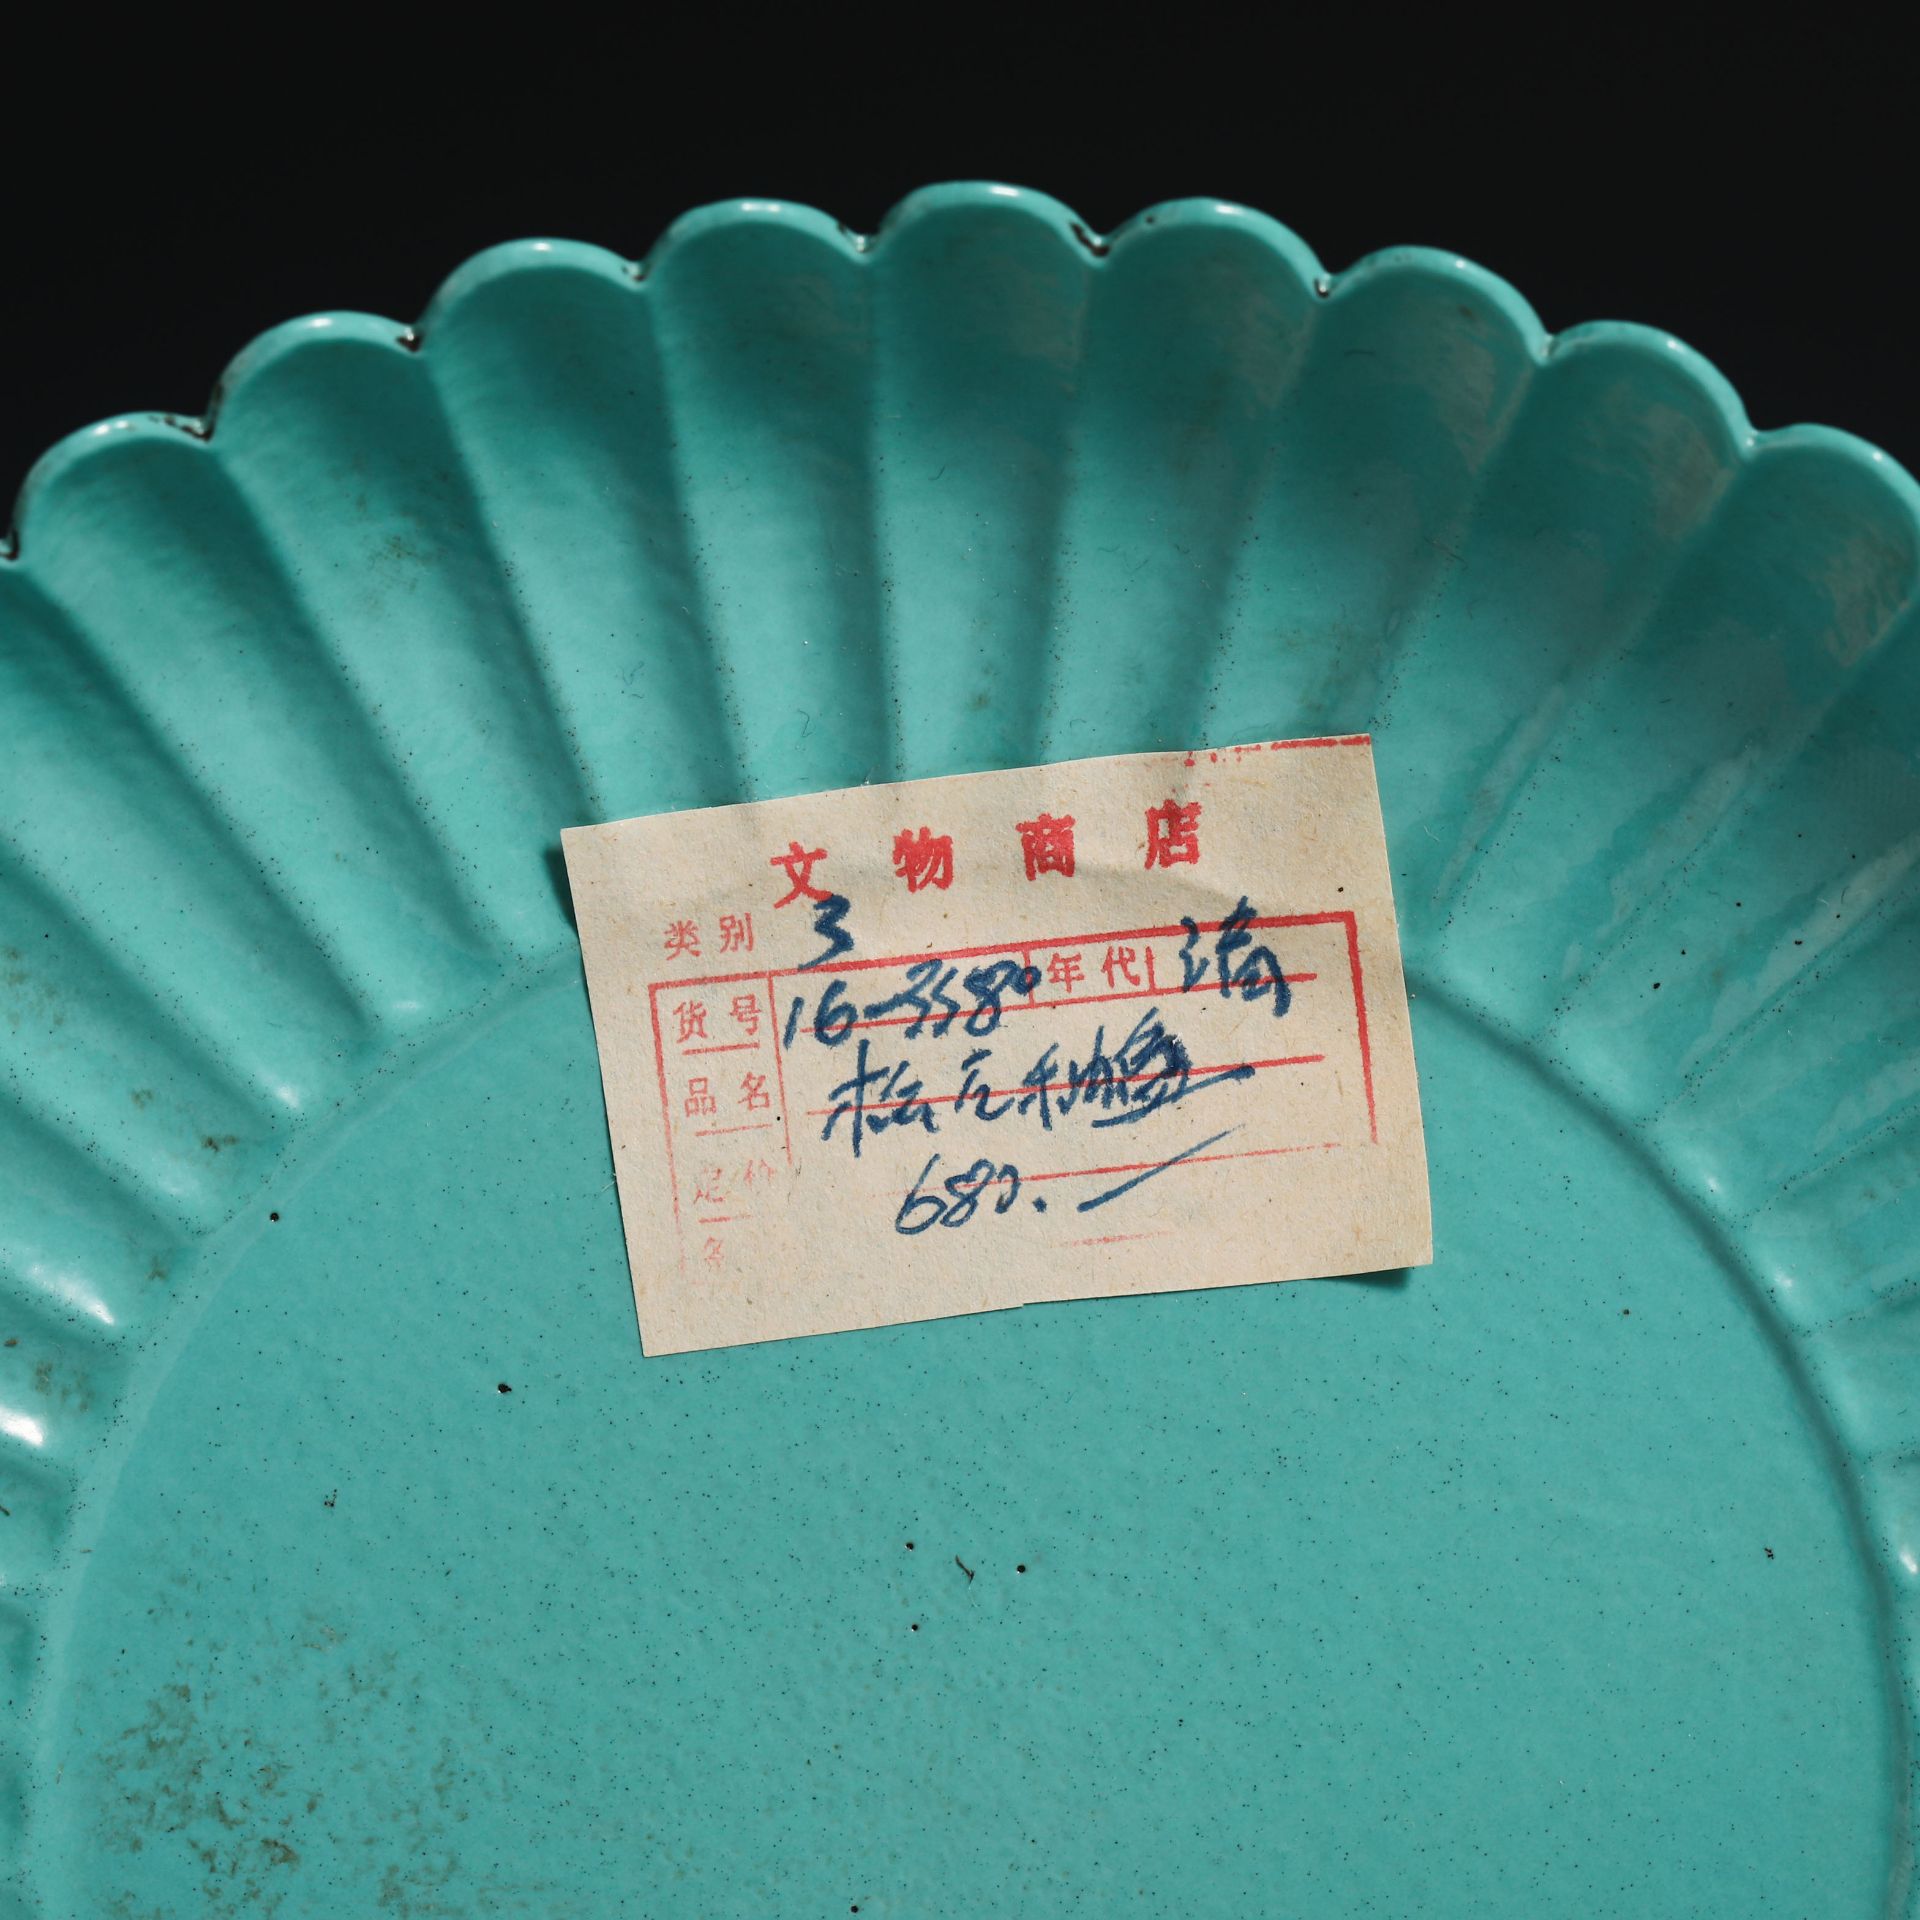 Pair of Turquoise-Glazed Plates, 18th century - Image 2 of 7